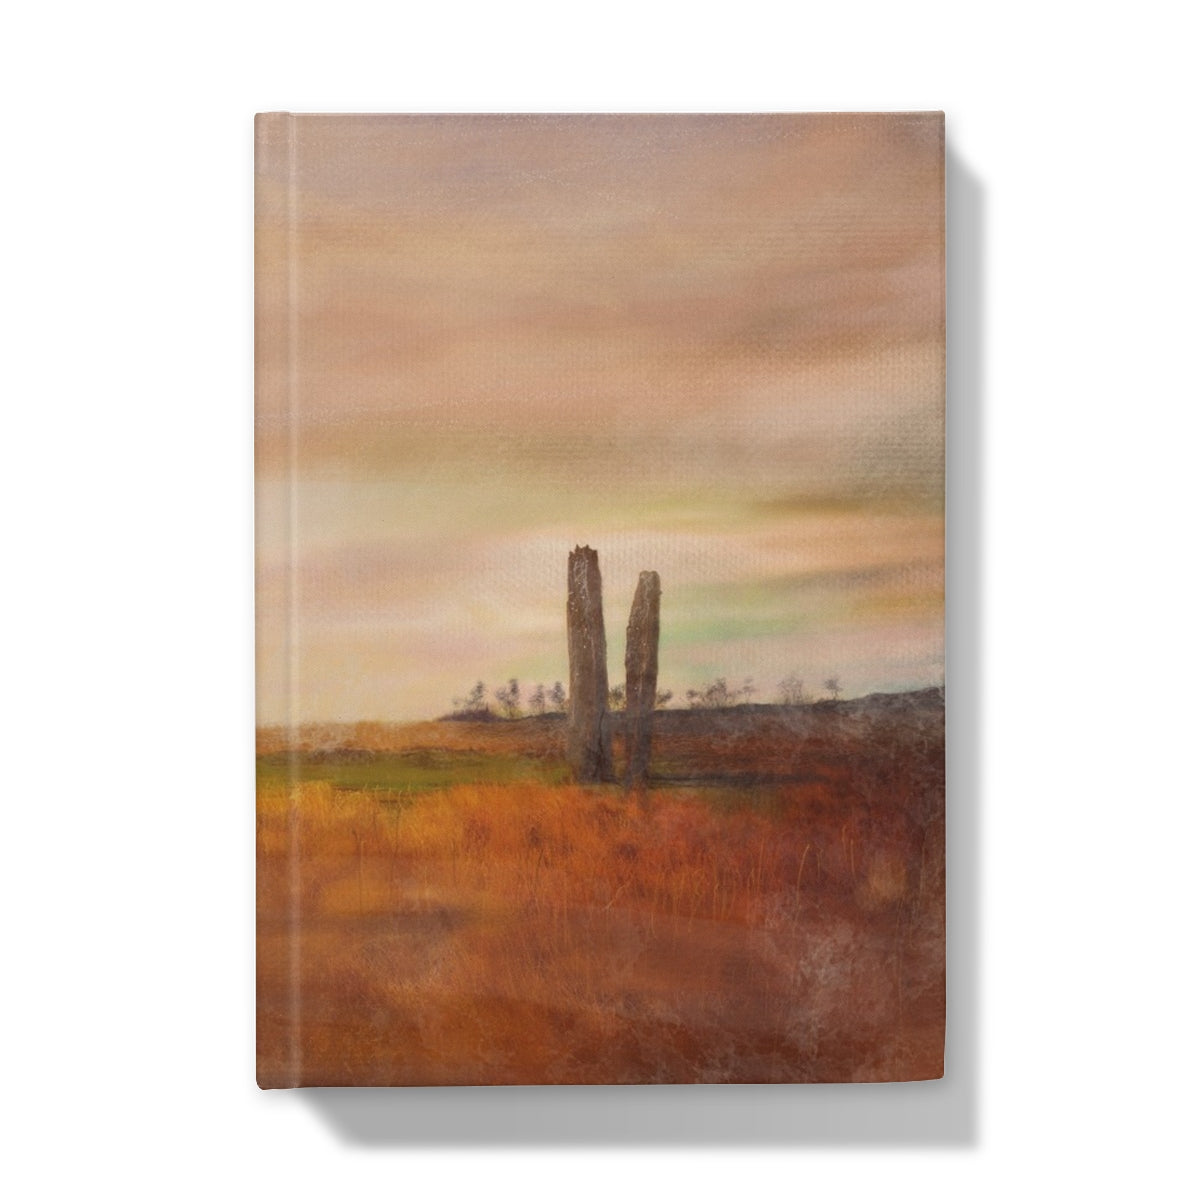 Machrie Moor Arran Art Gifts Hardback Journal-Journals & Notebooks-Arran Art Gallery-A5-Plain-Paintings, Prints, Homeware, Art Gifts From Scotland By Scottish Artist Kevin Hunter